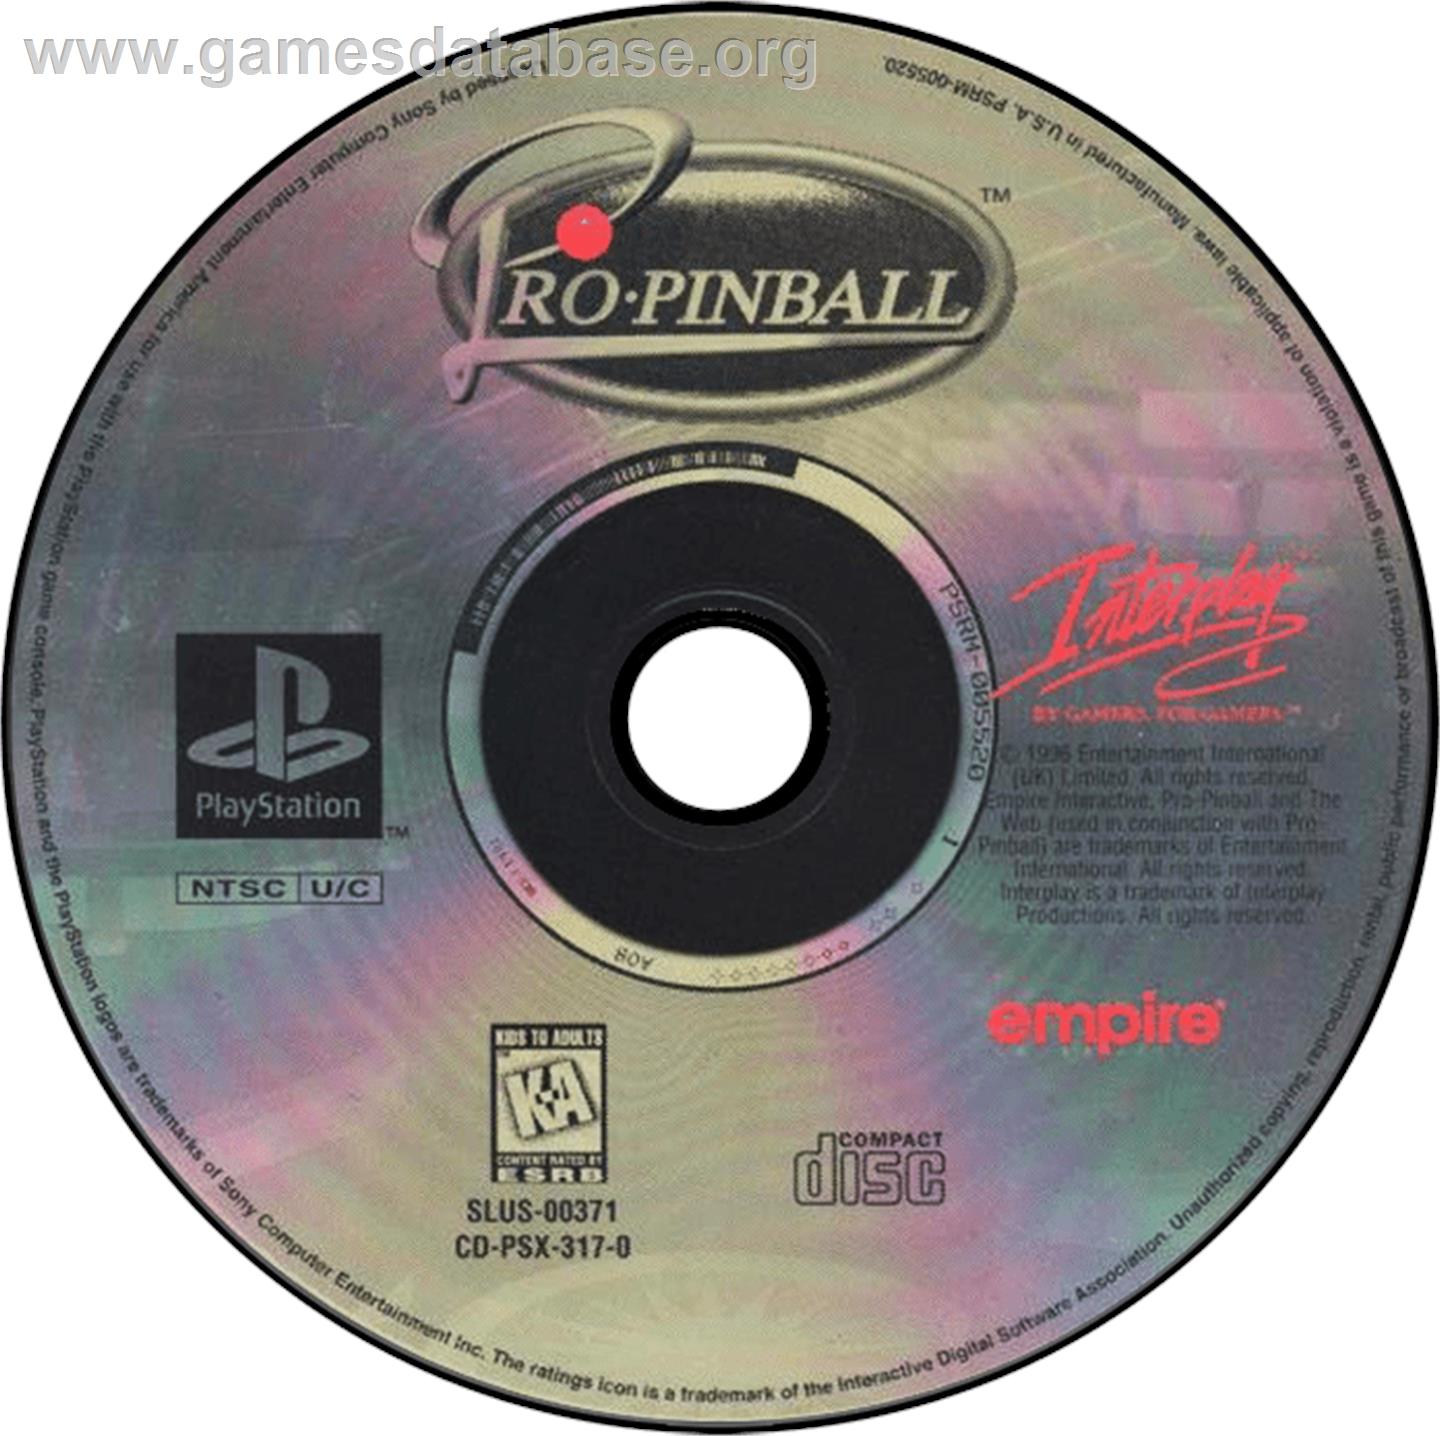 Pro Pinball: The Web - Sony Playstation - Artwork - Disc